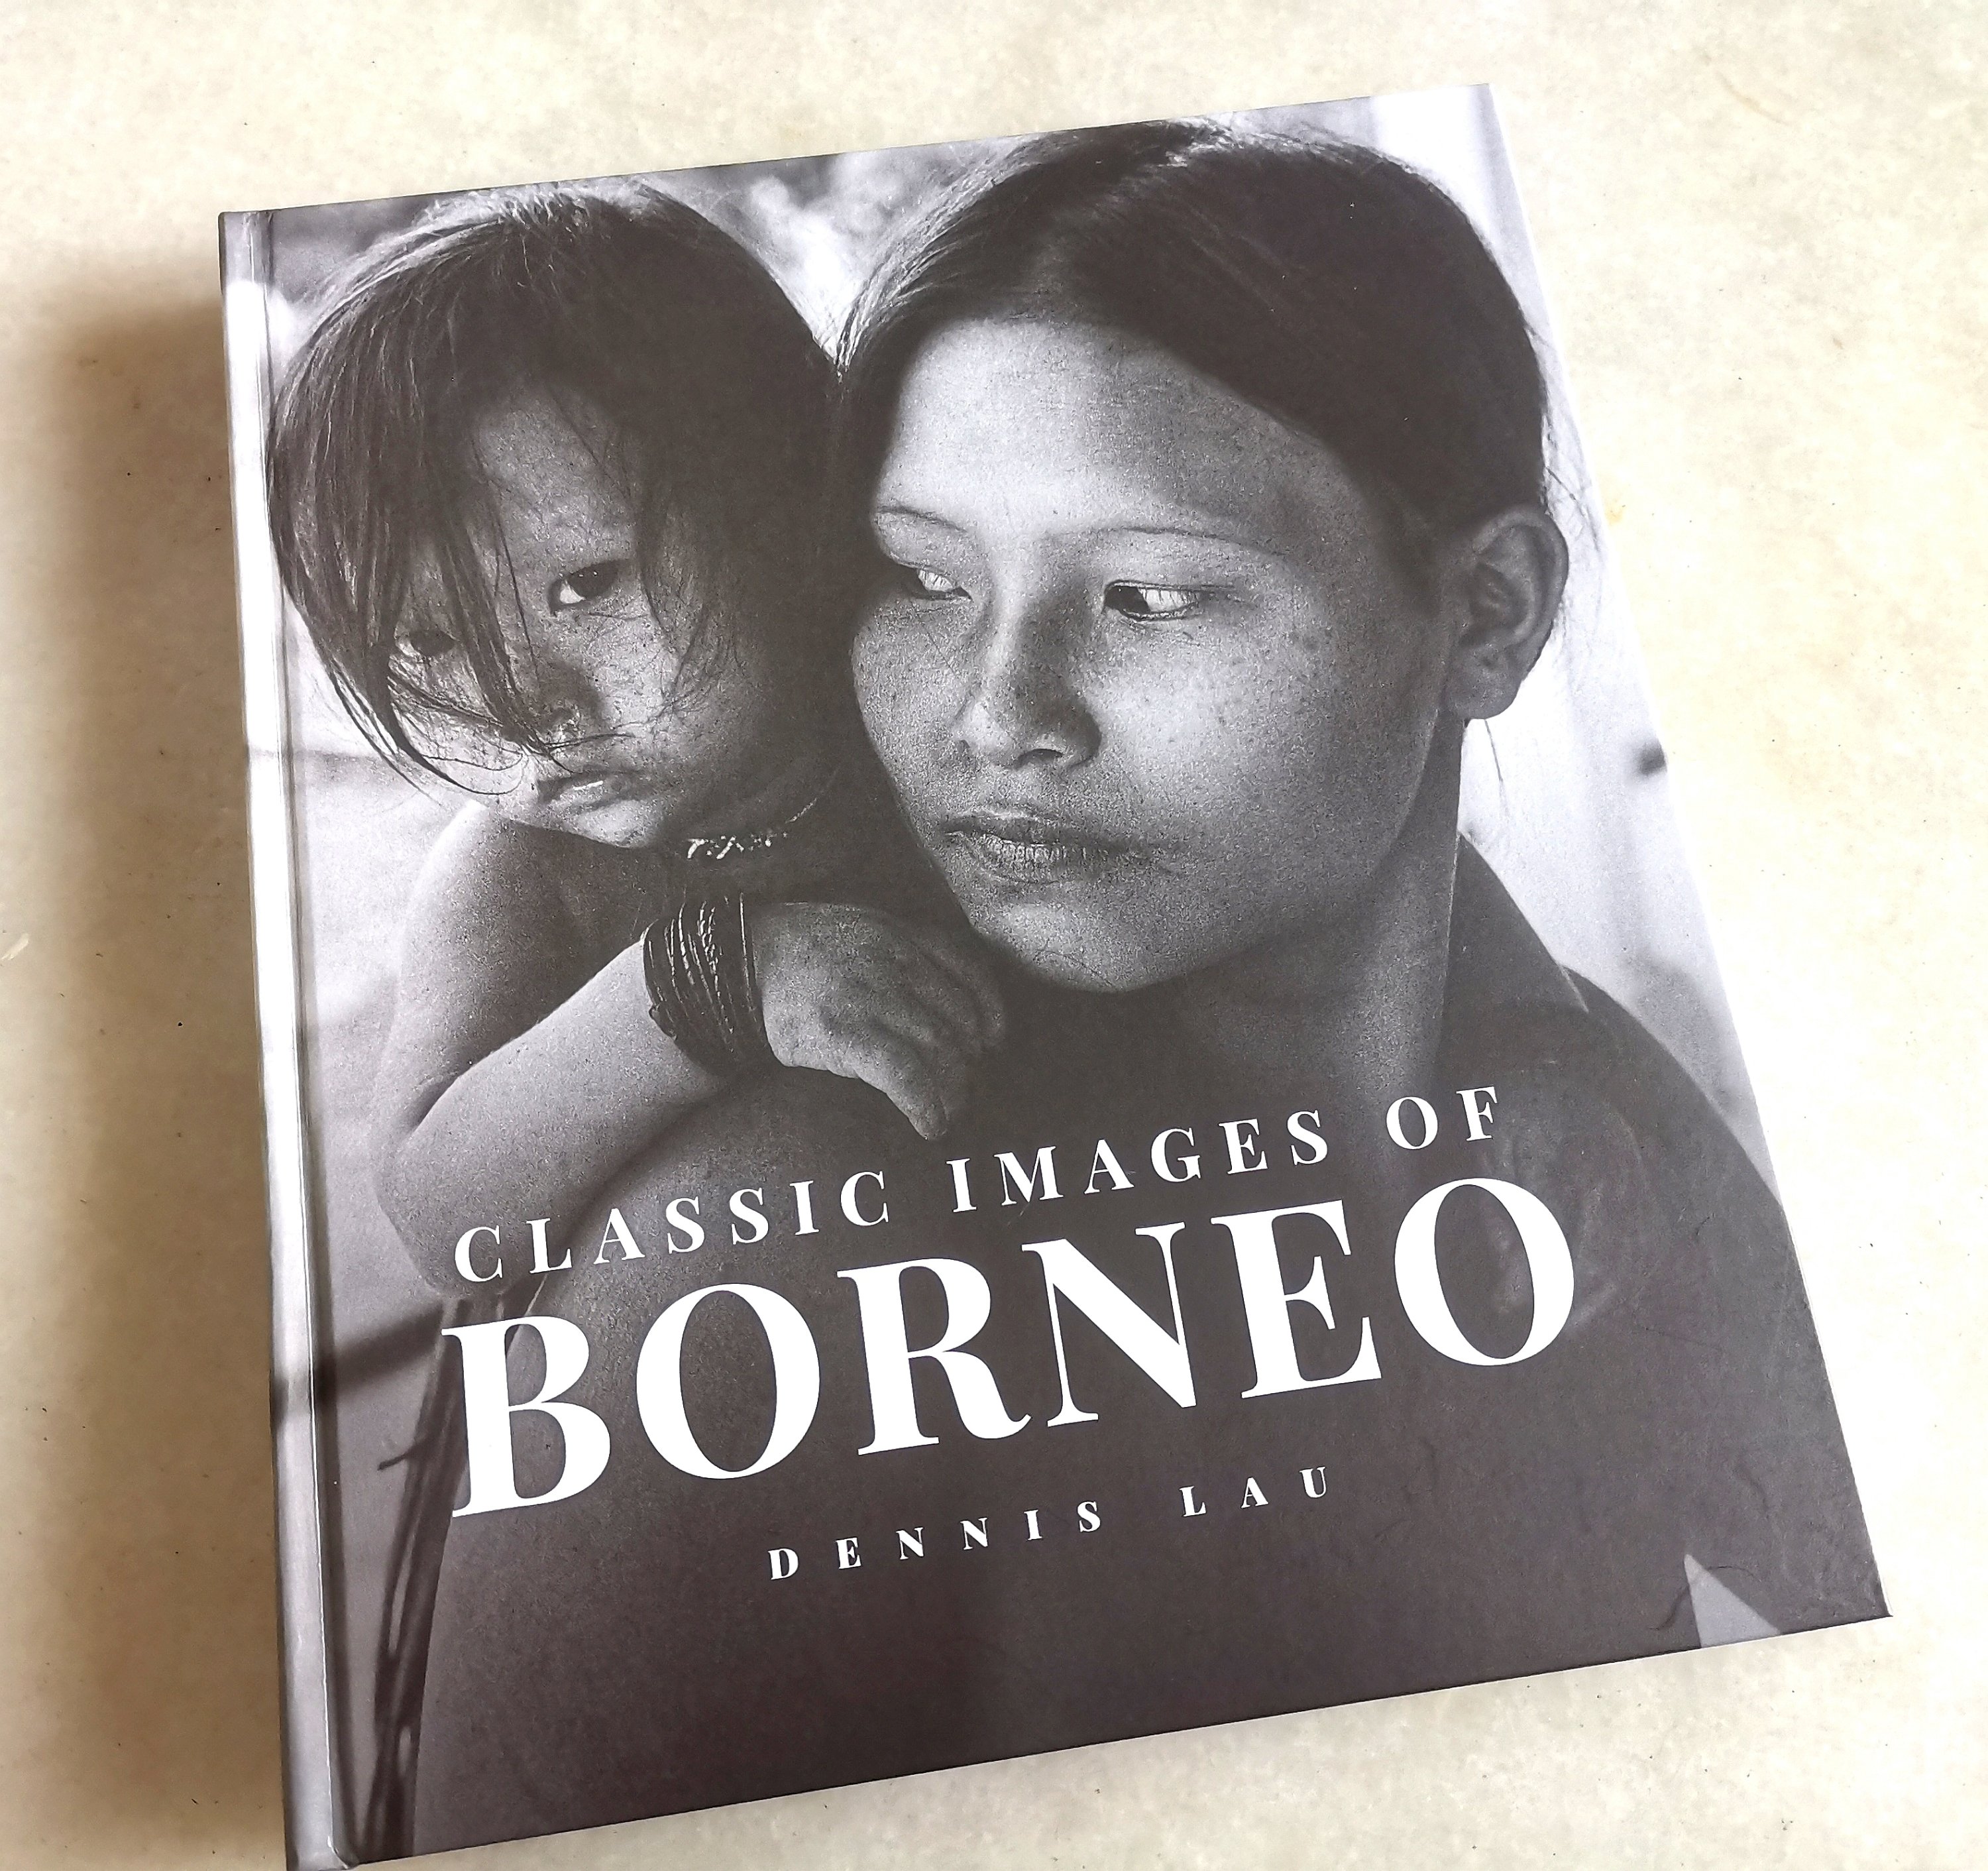 ‘Gambar Klasik Borneo’ karya Dennis Lau — Resensi buku